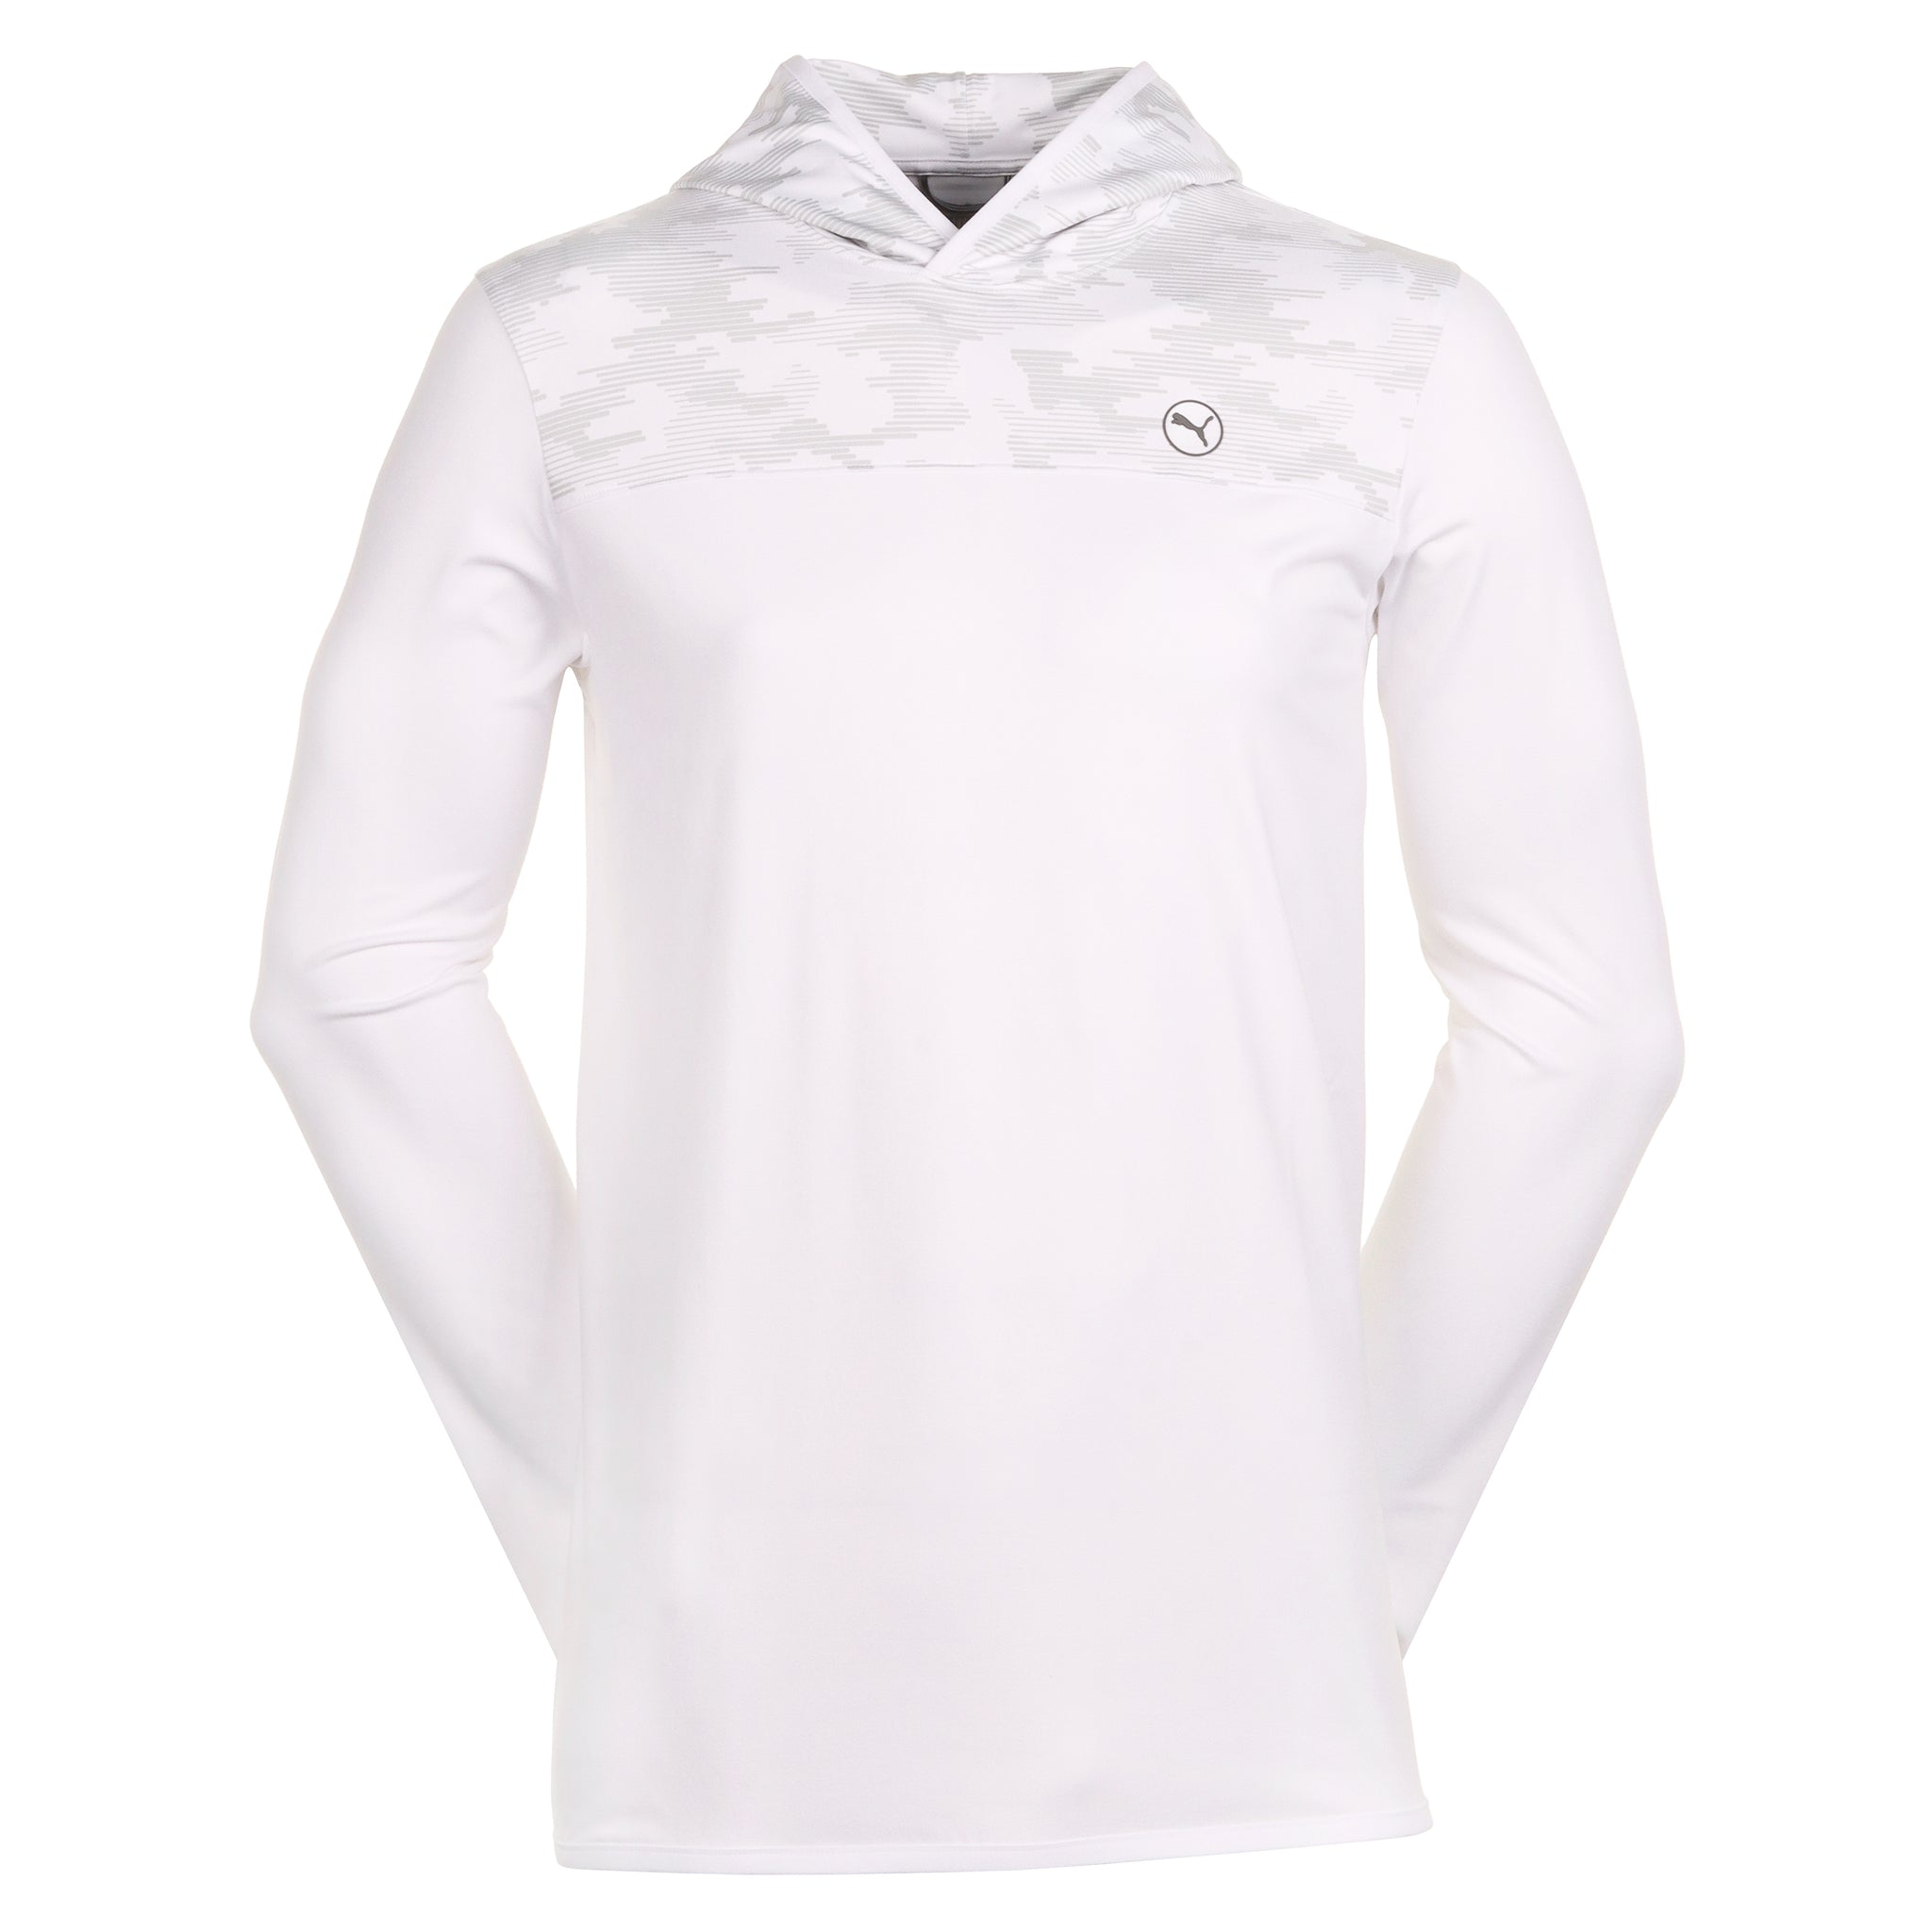 puma-golf-cloudspun-camo-hoodie-625913-white-glow-03